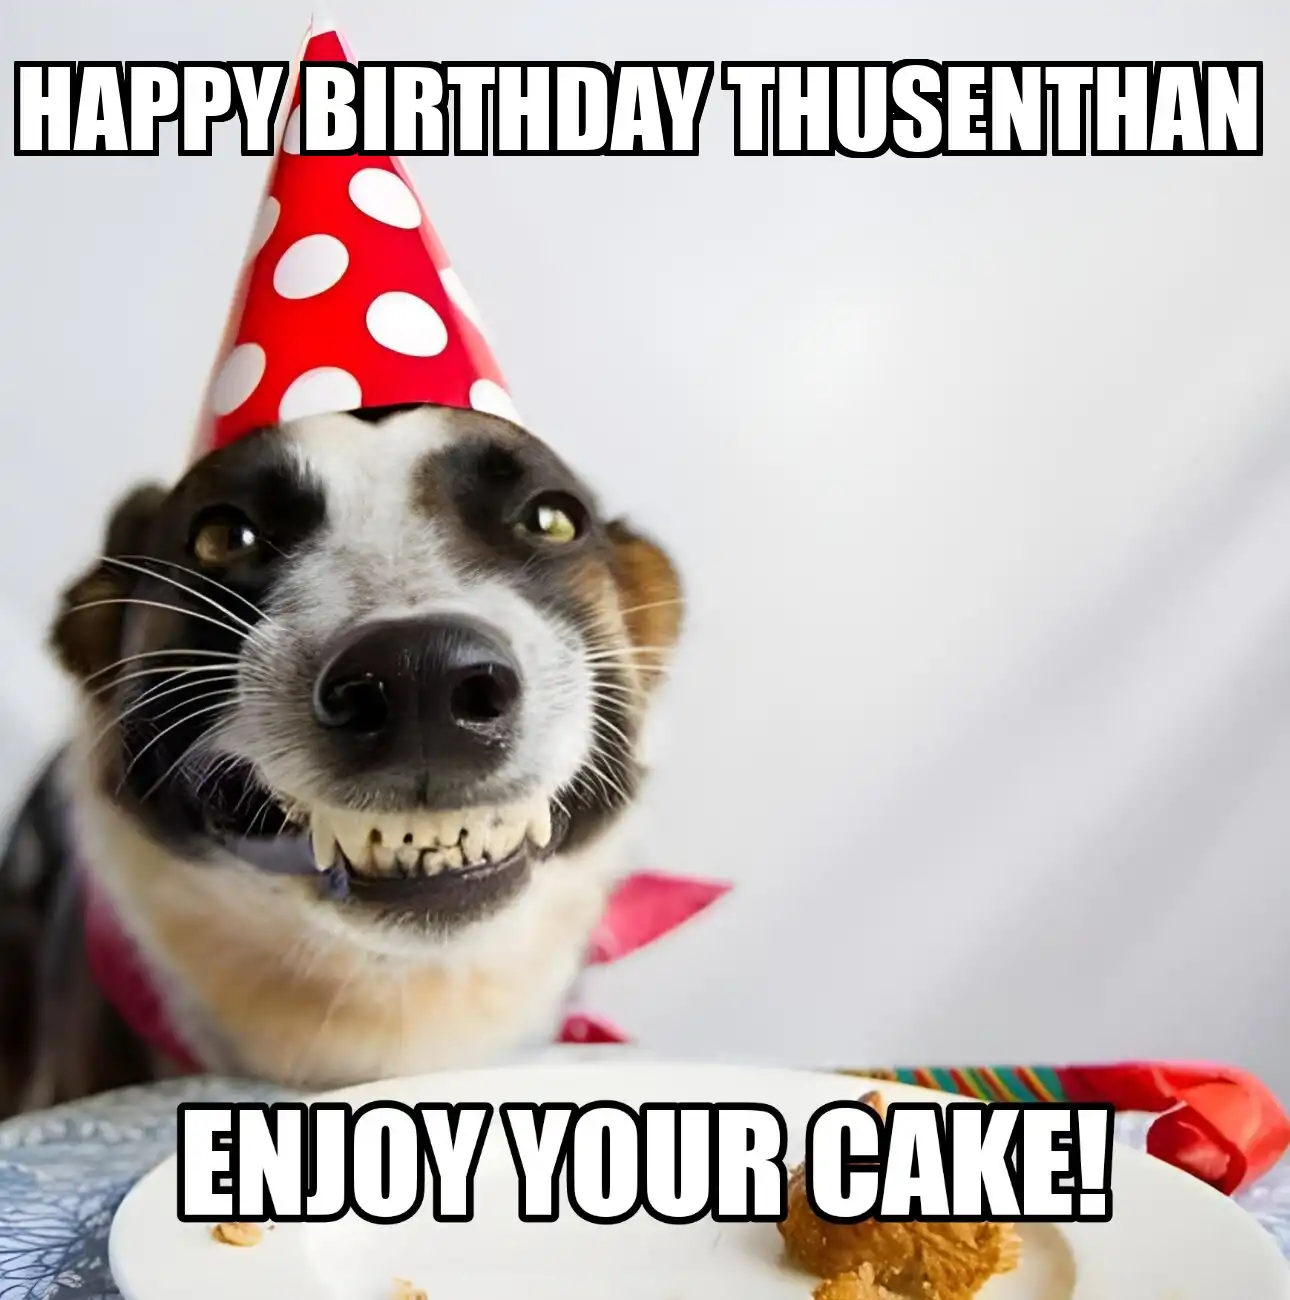 Happy Birthday Thusenthan Enjoy Your Cake Dog Meme